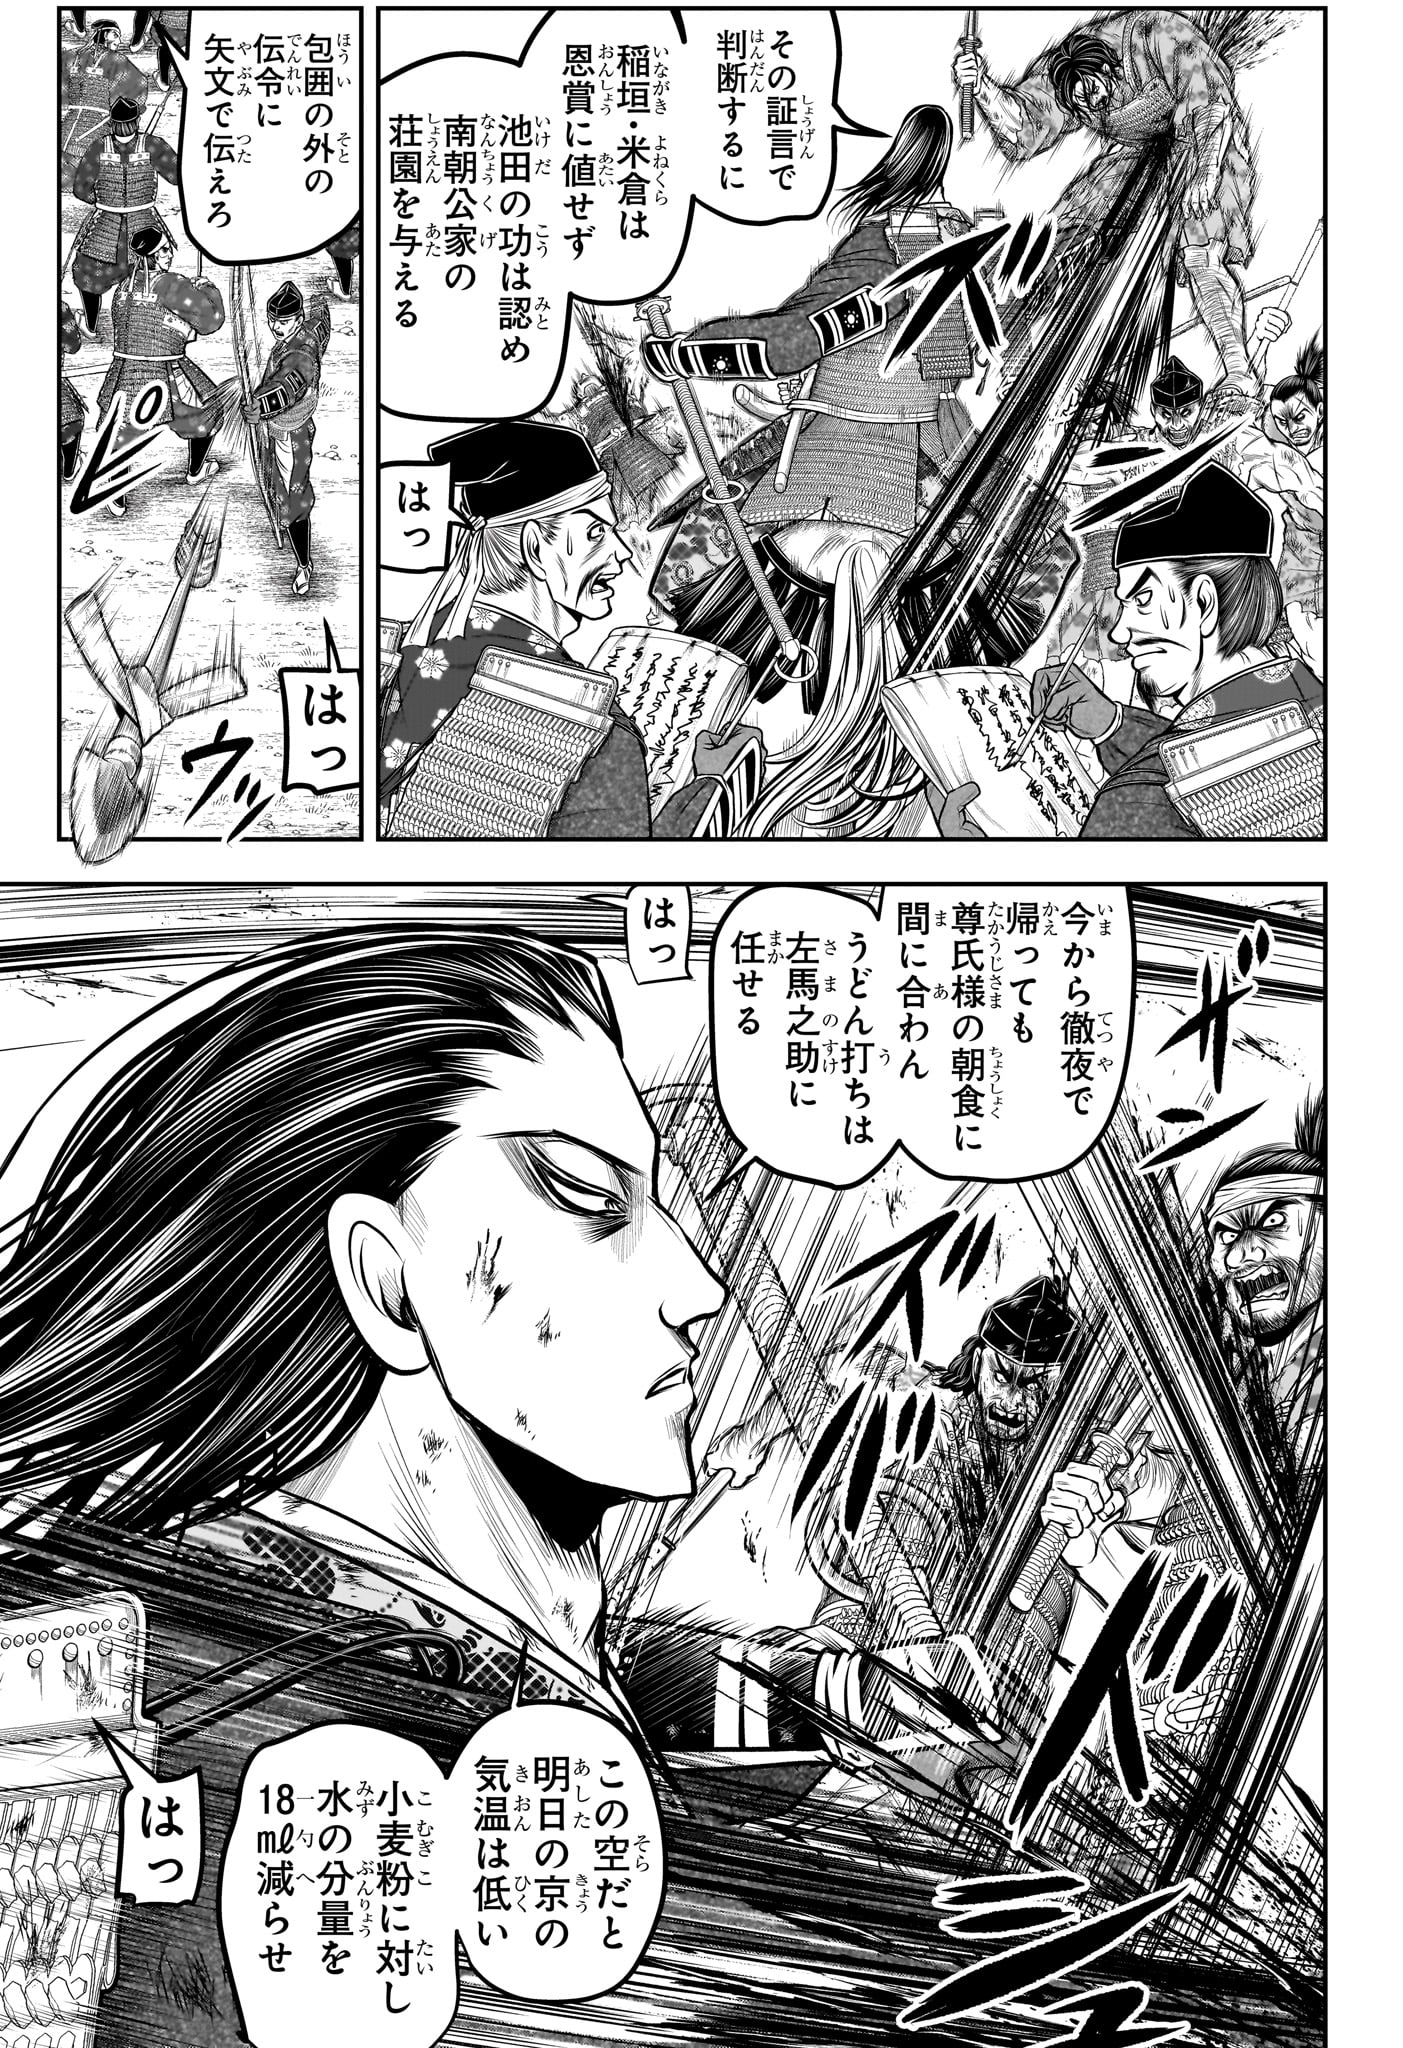 Nige Jouzu no Wakagimi - Chapter 163 - Page 8